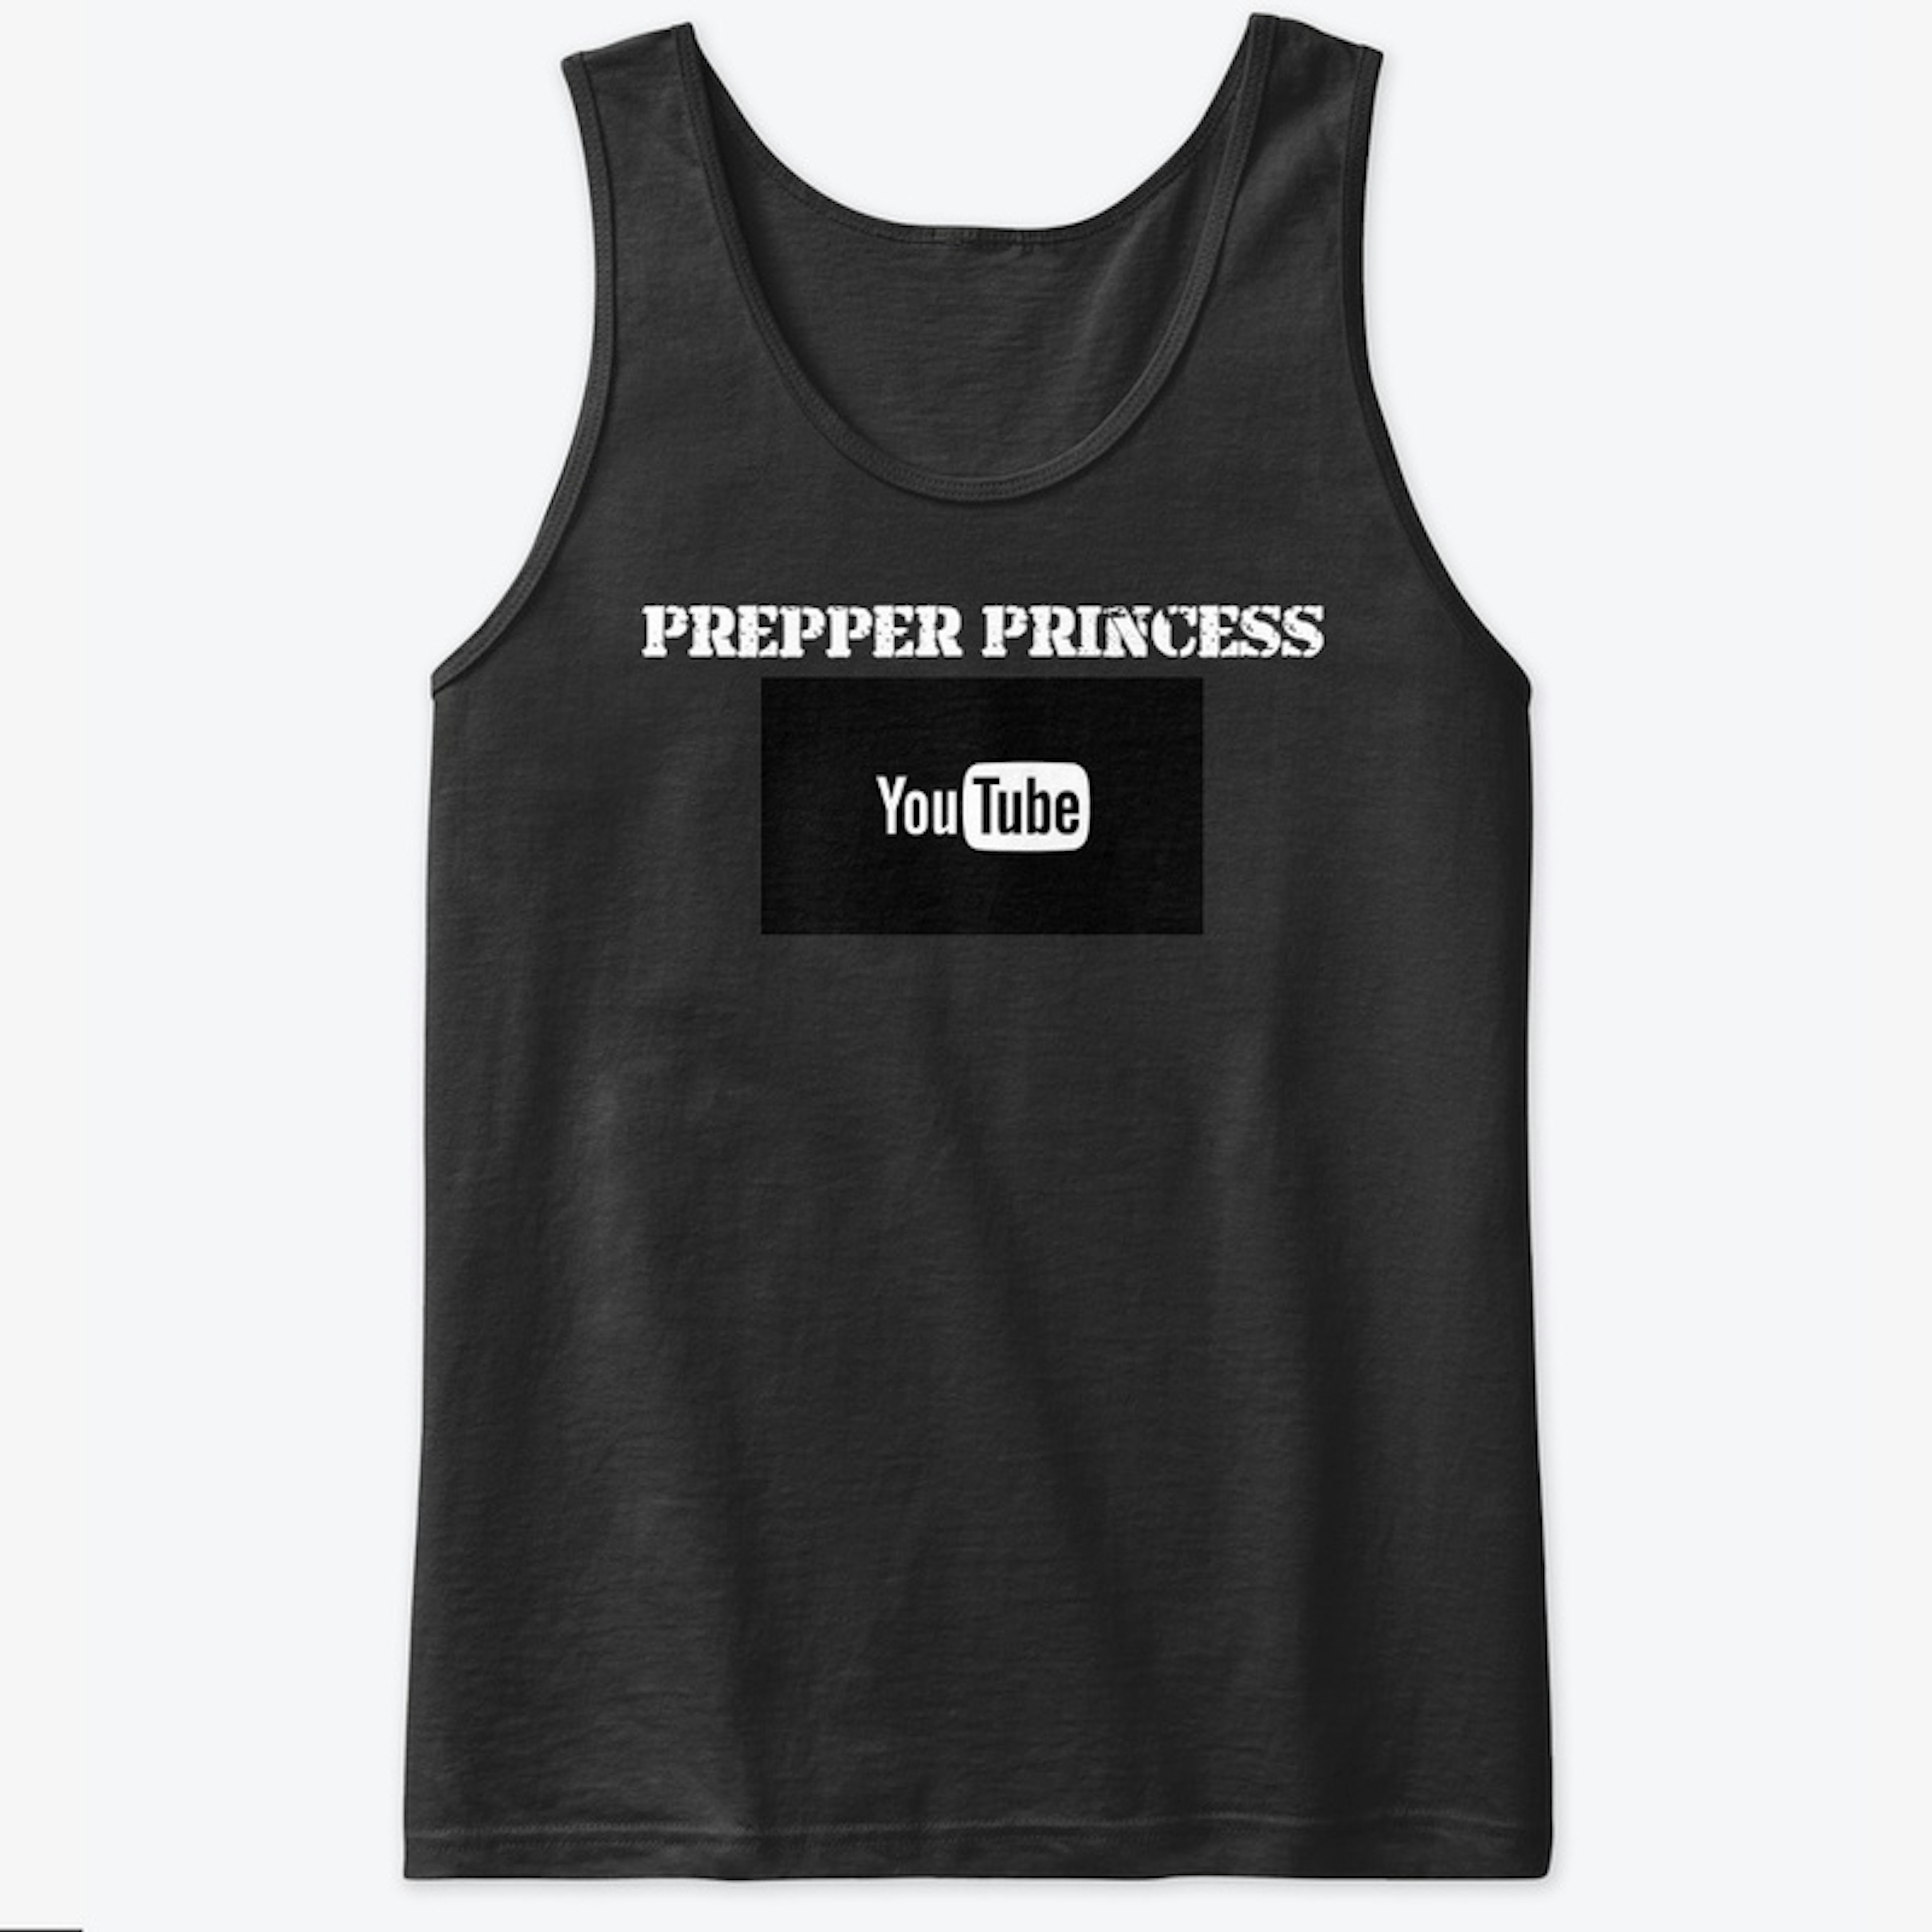 Prepper Princess Black T-shirt